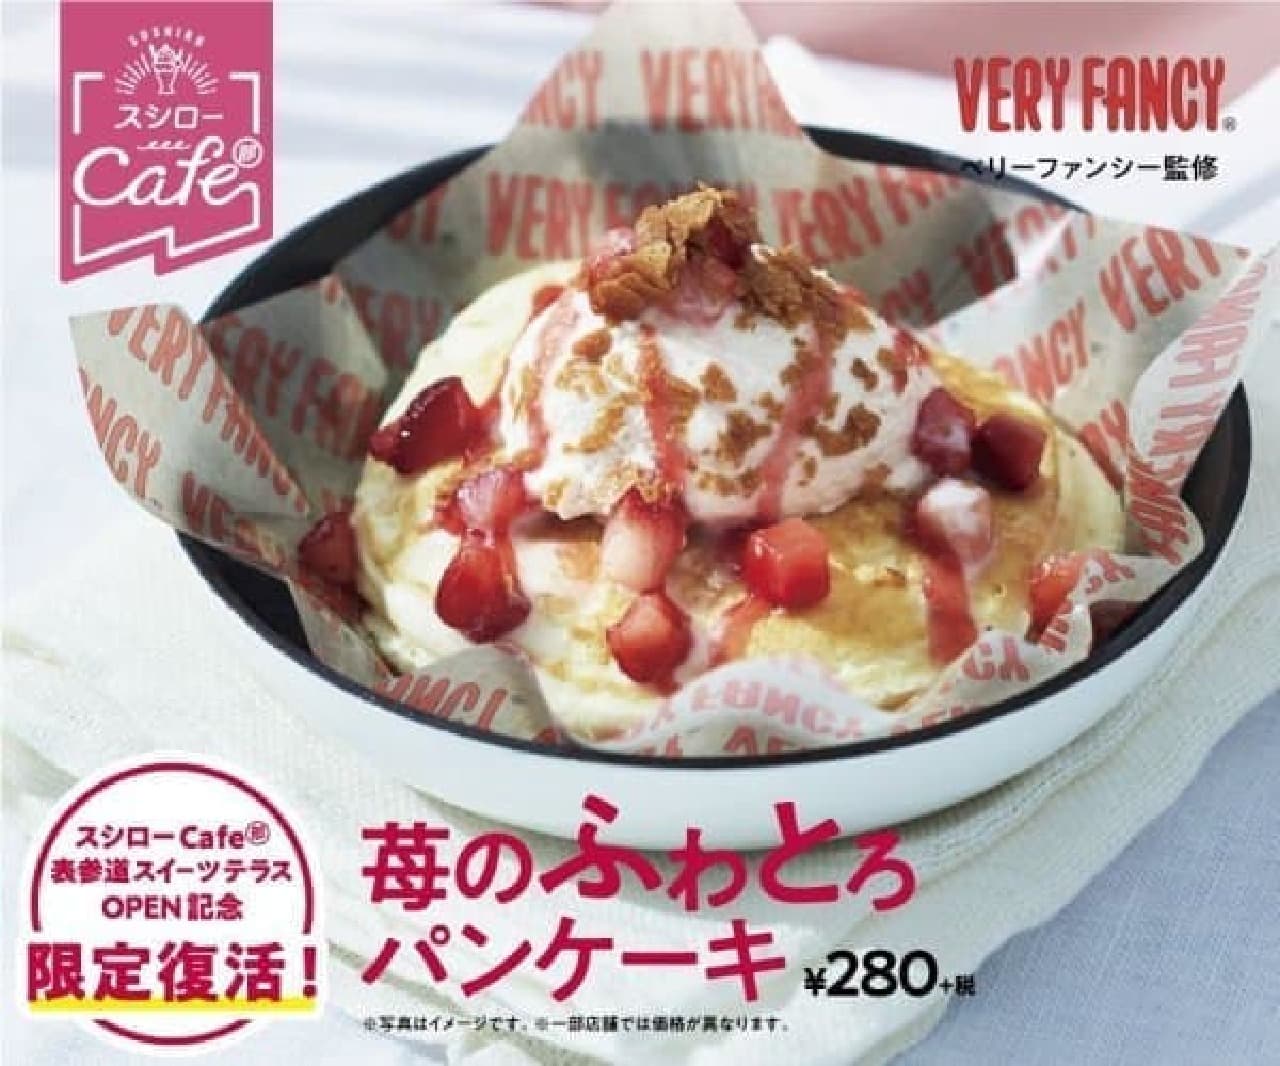 Sushiro "Strawberry Fluffy Pancake" is back